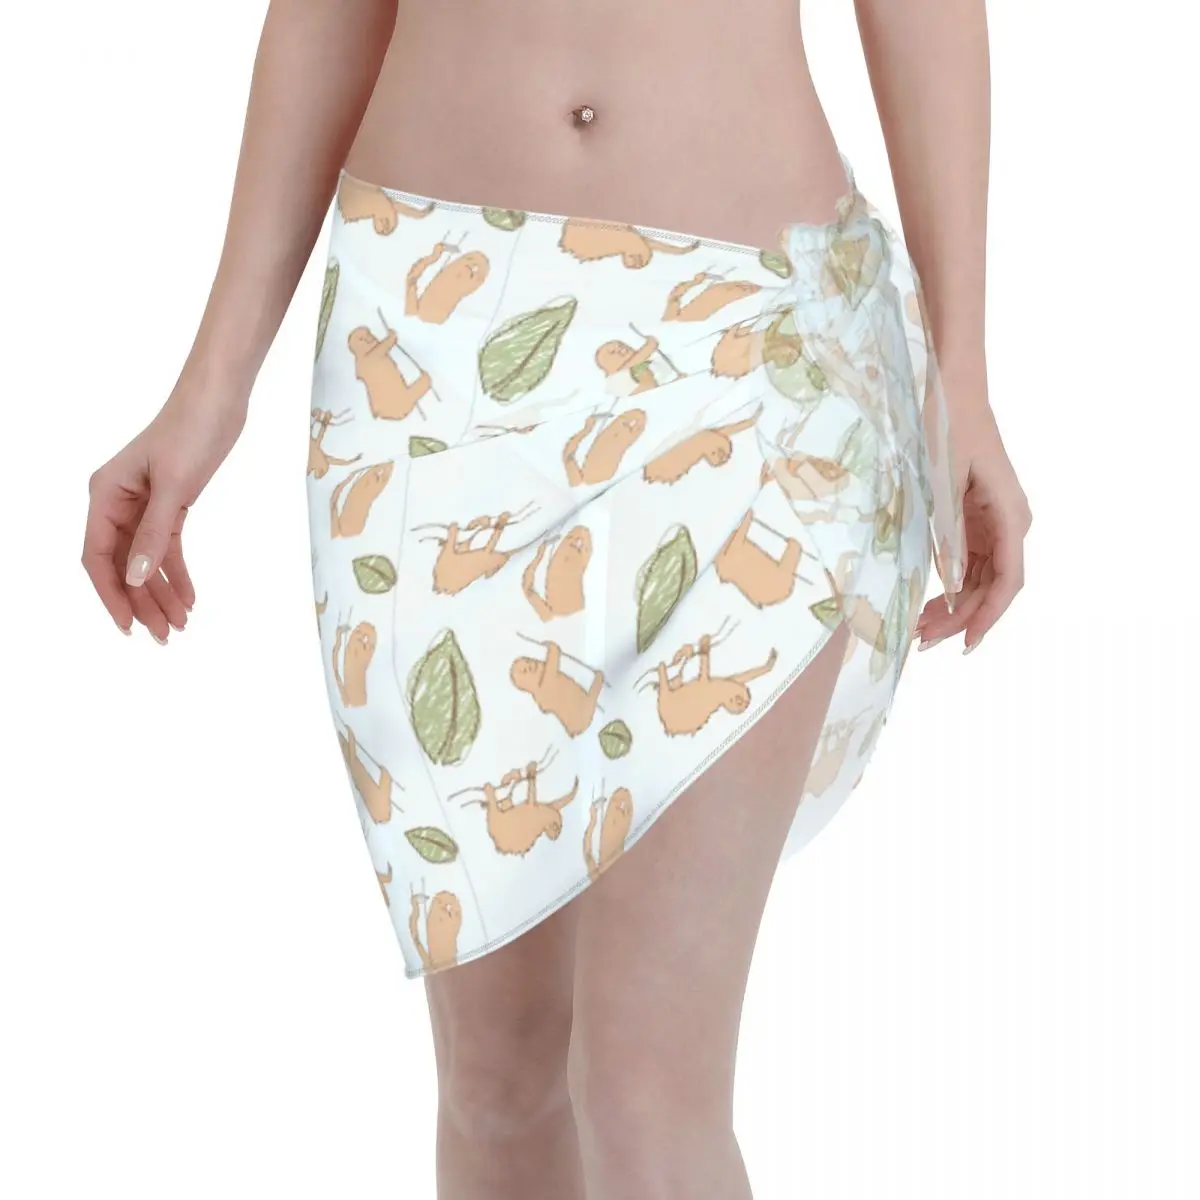 

Cute Sloth Patterns Women Cover Up Wrap Chiffon Swimwear Pareo Sarong Beach Wear Fashion Bikinis Cover Ups Skirts Swimsuits